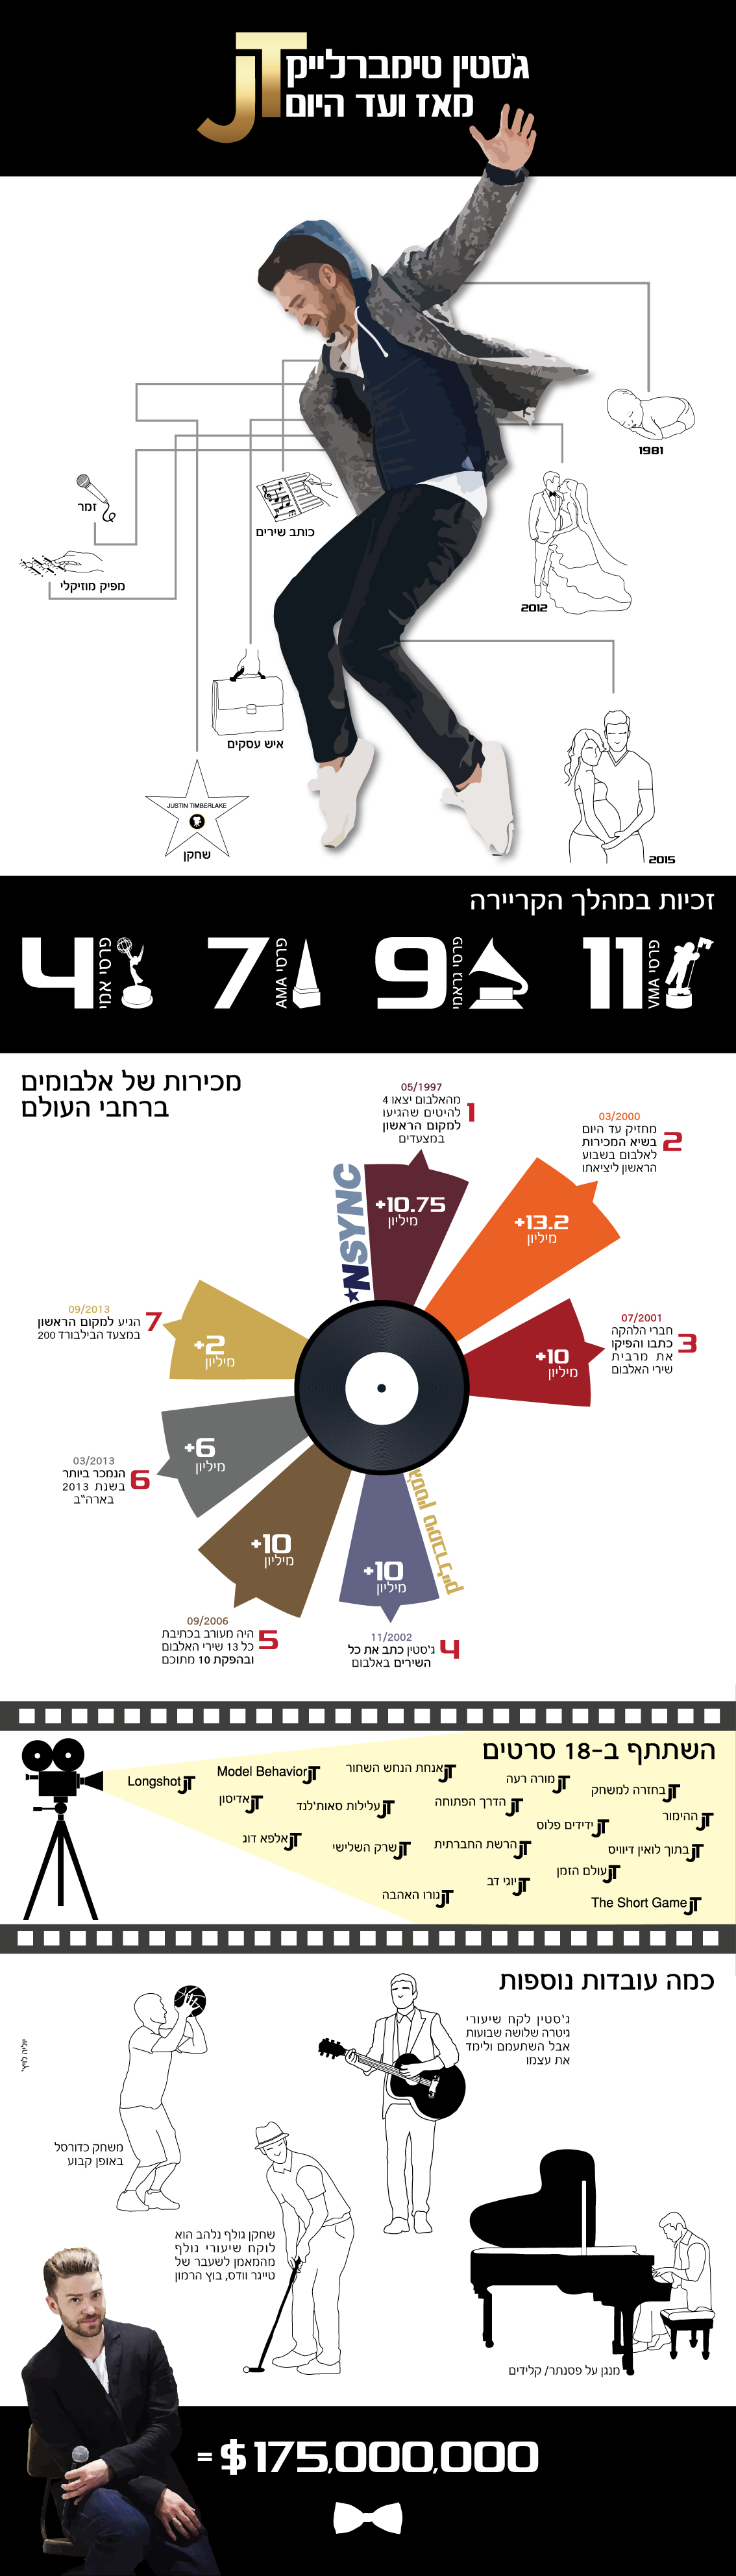 graphic design Justin Timberlake infographic